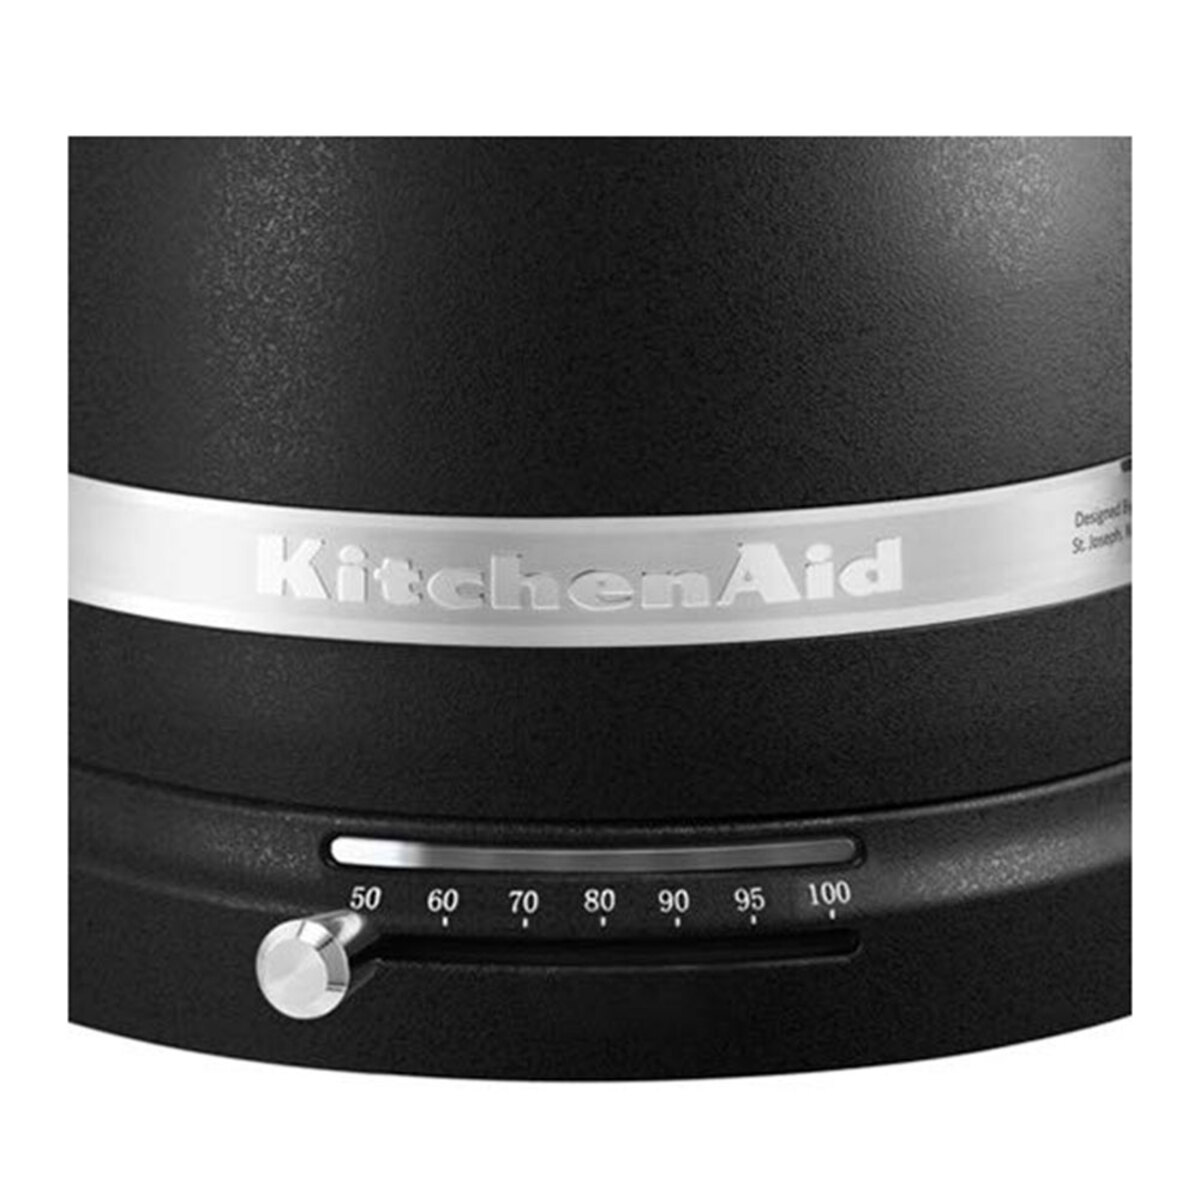 KitchenAid 5KEK1522BBK Artisan 1,5l Kettle, Cast Iron Black